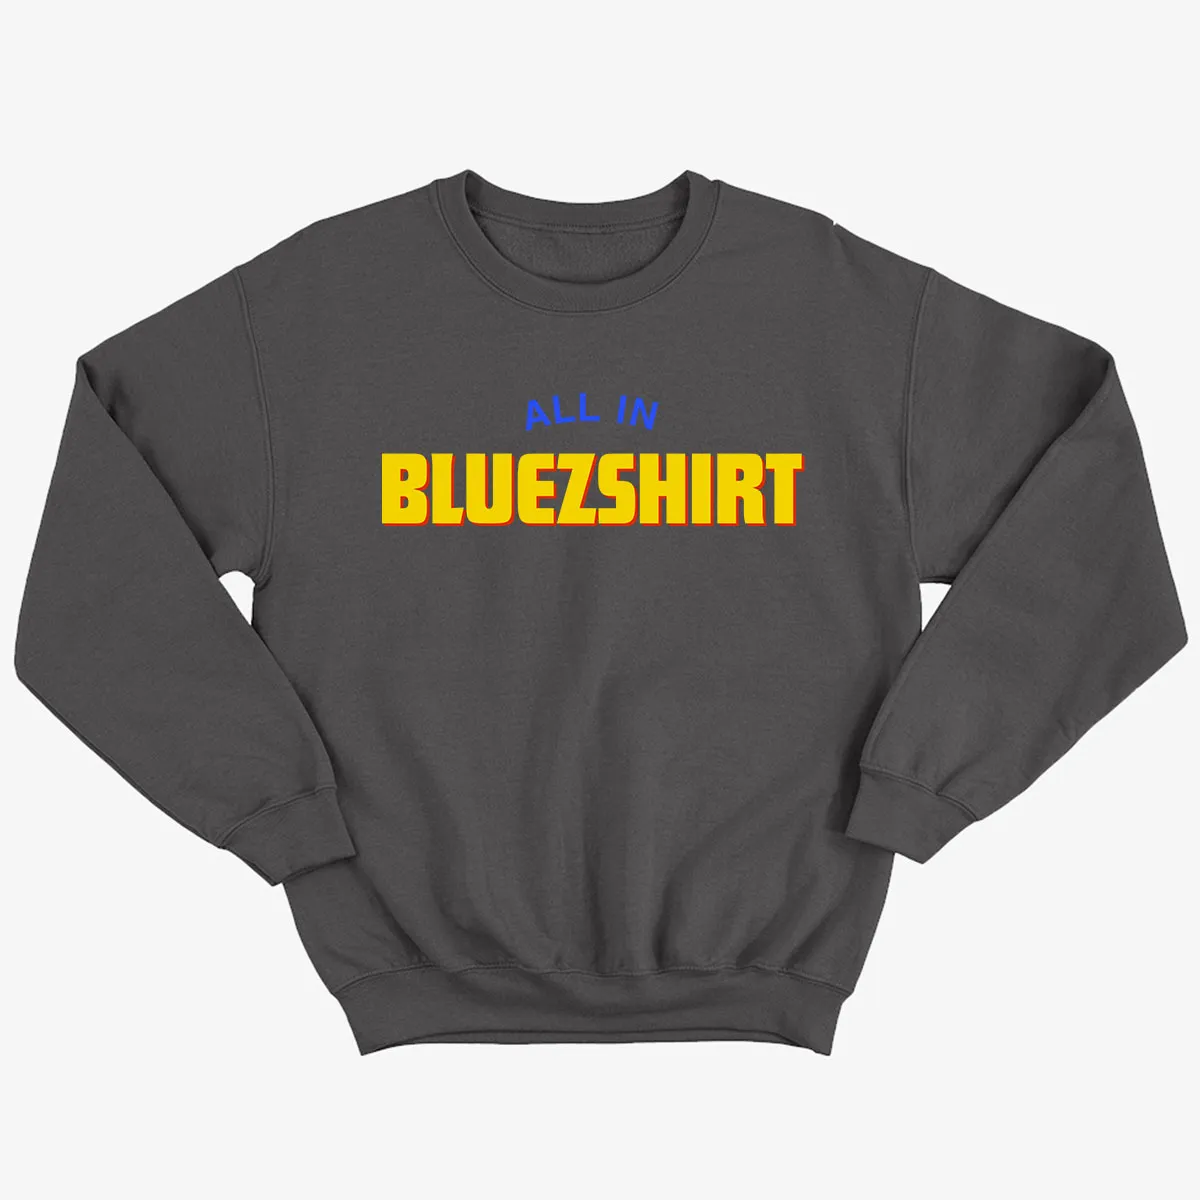 All In Bluezshirt Sweatshirt - Black